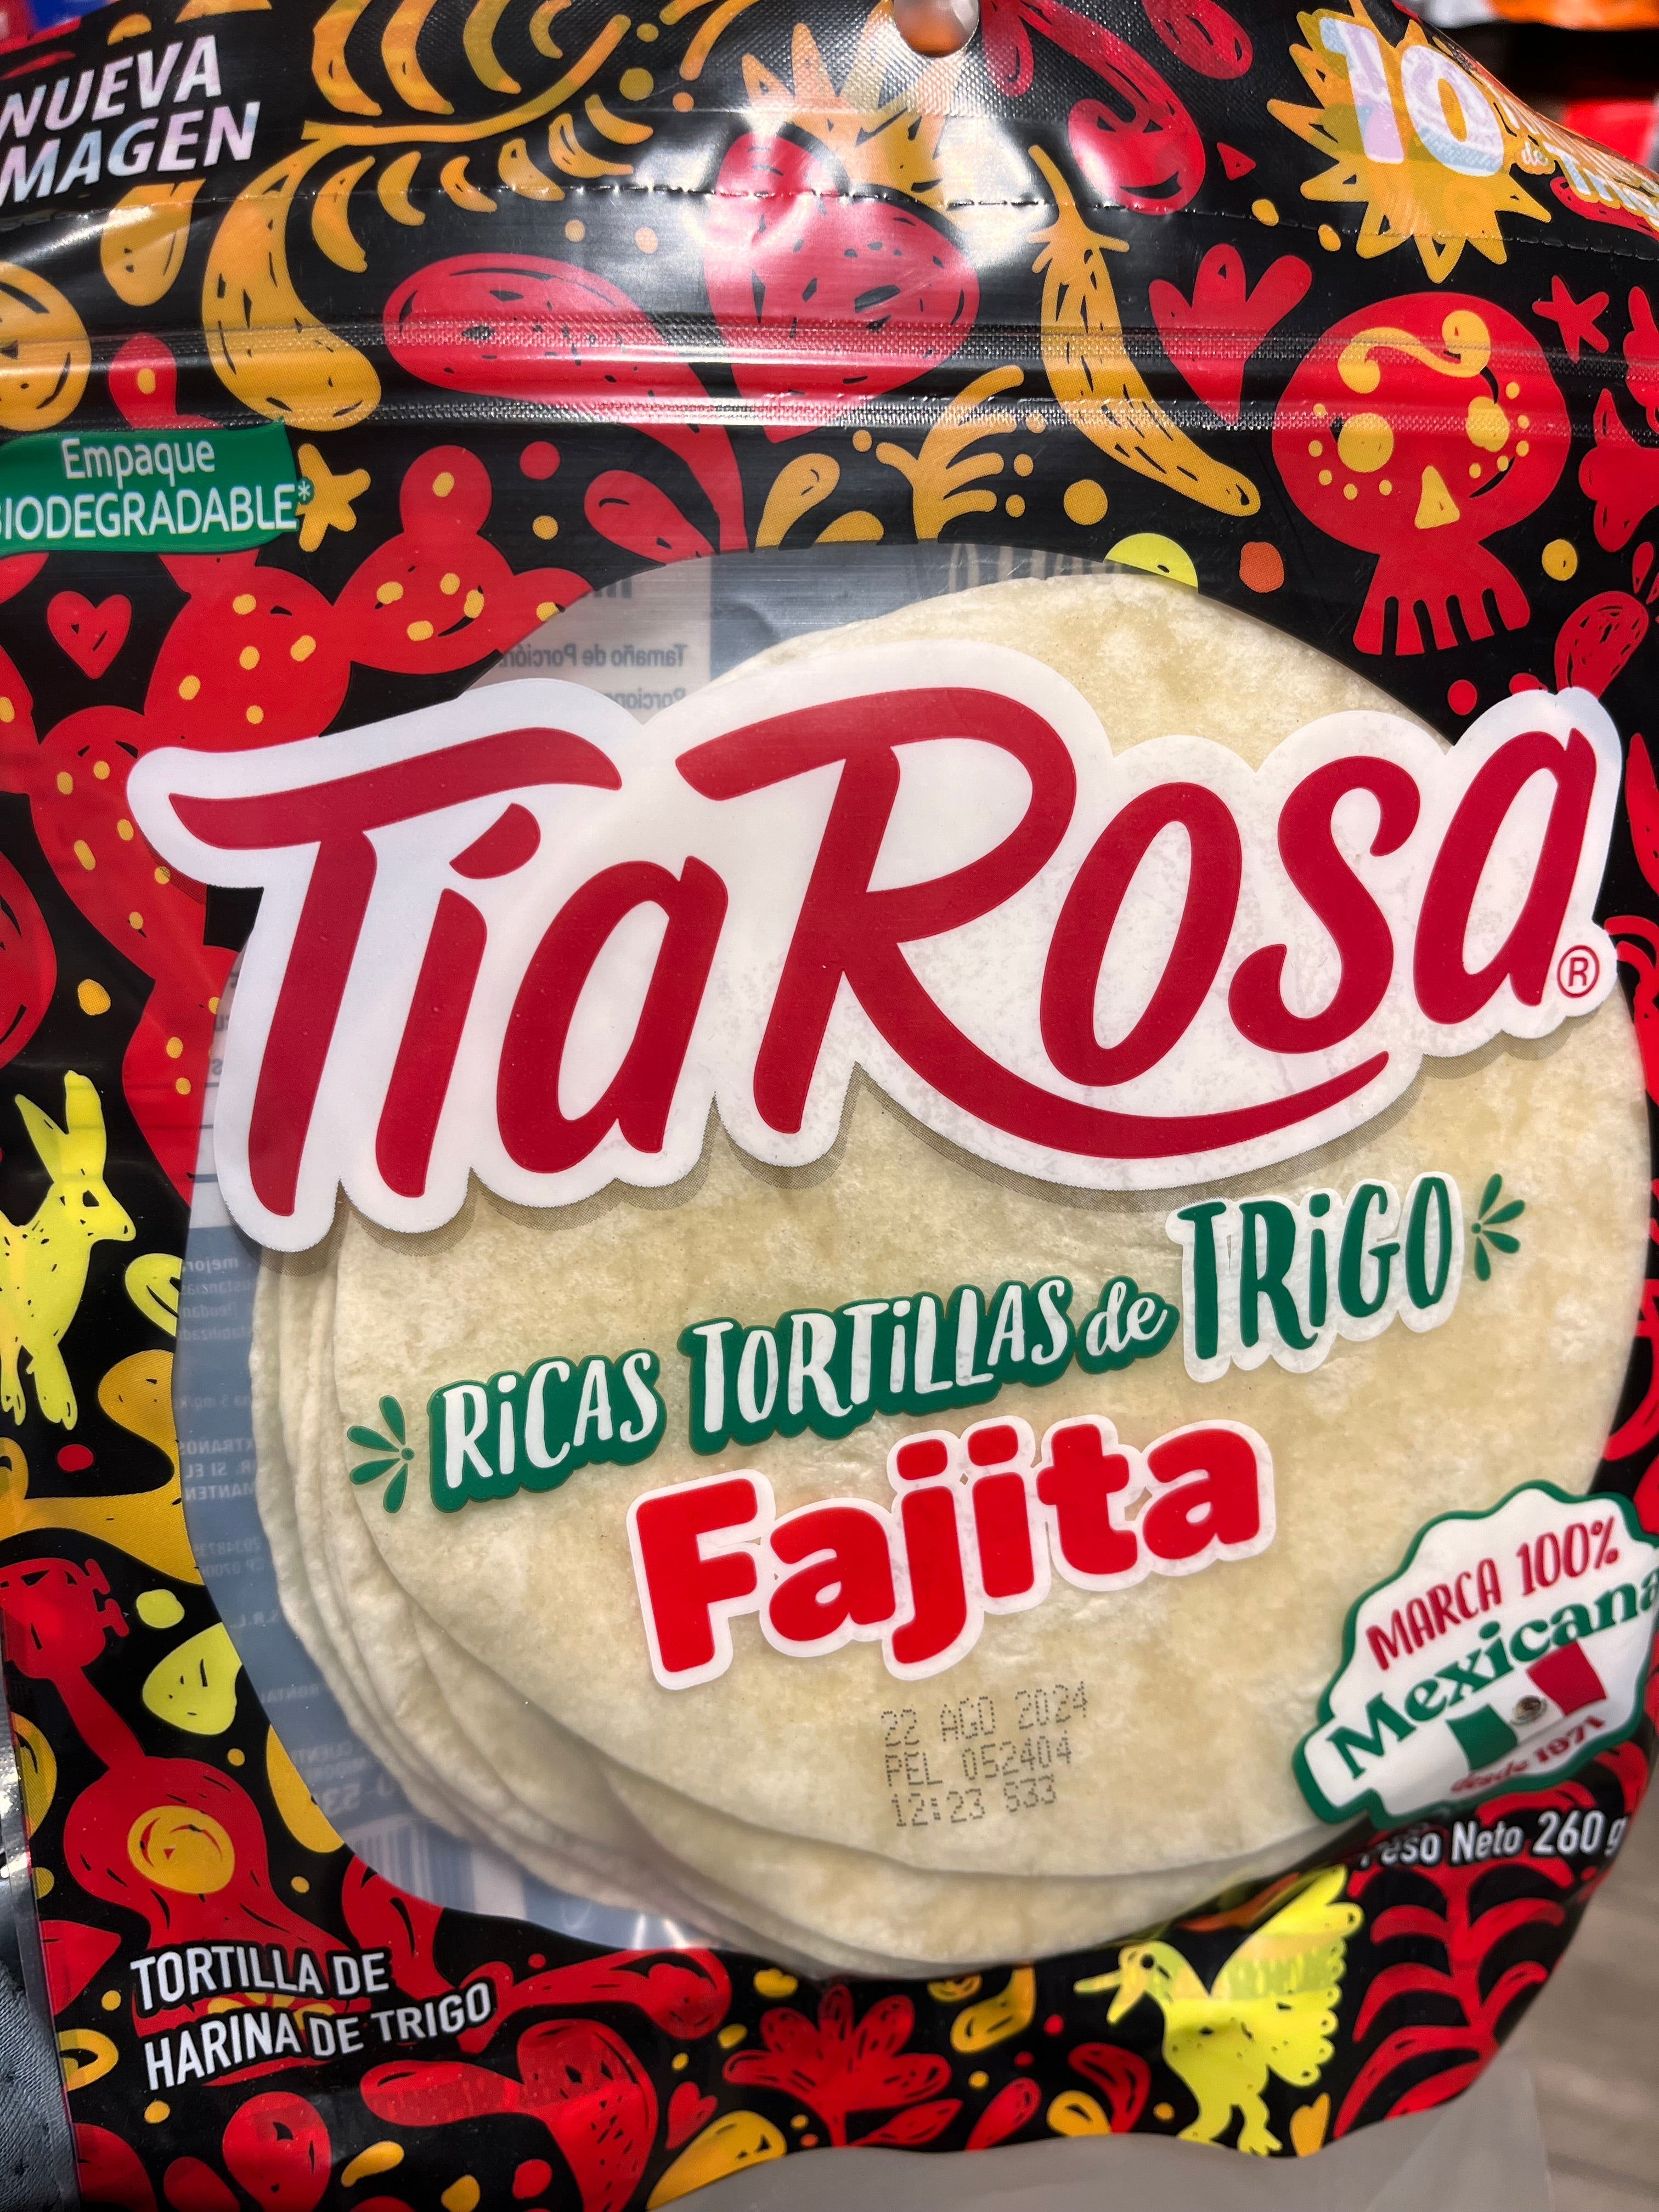 Tortillas de harina de trigo, 260grs Tía Rosa